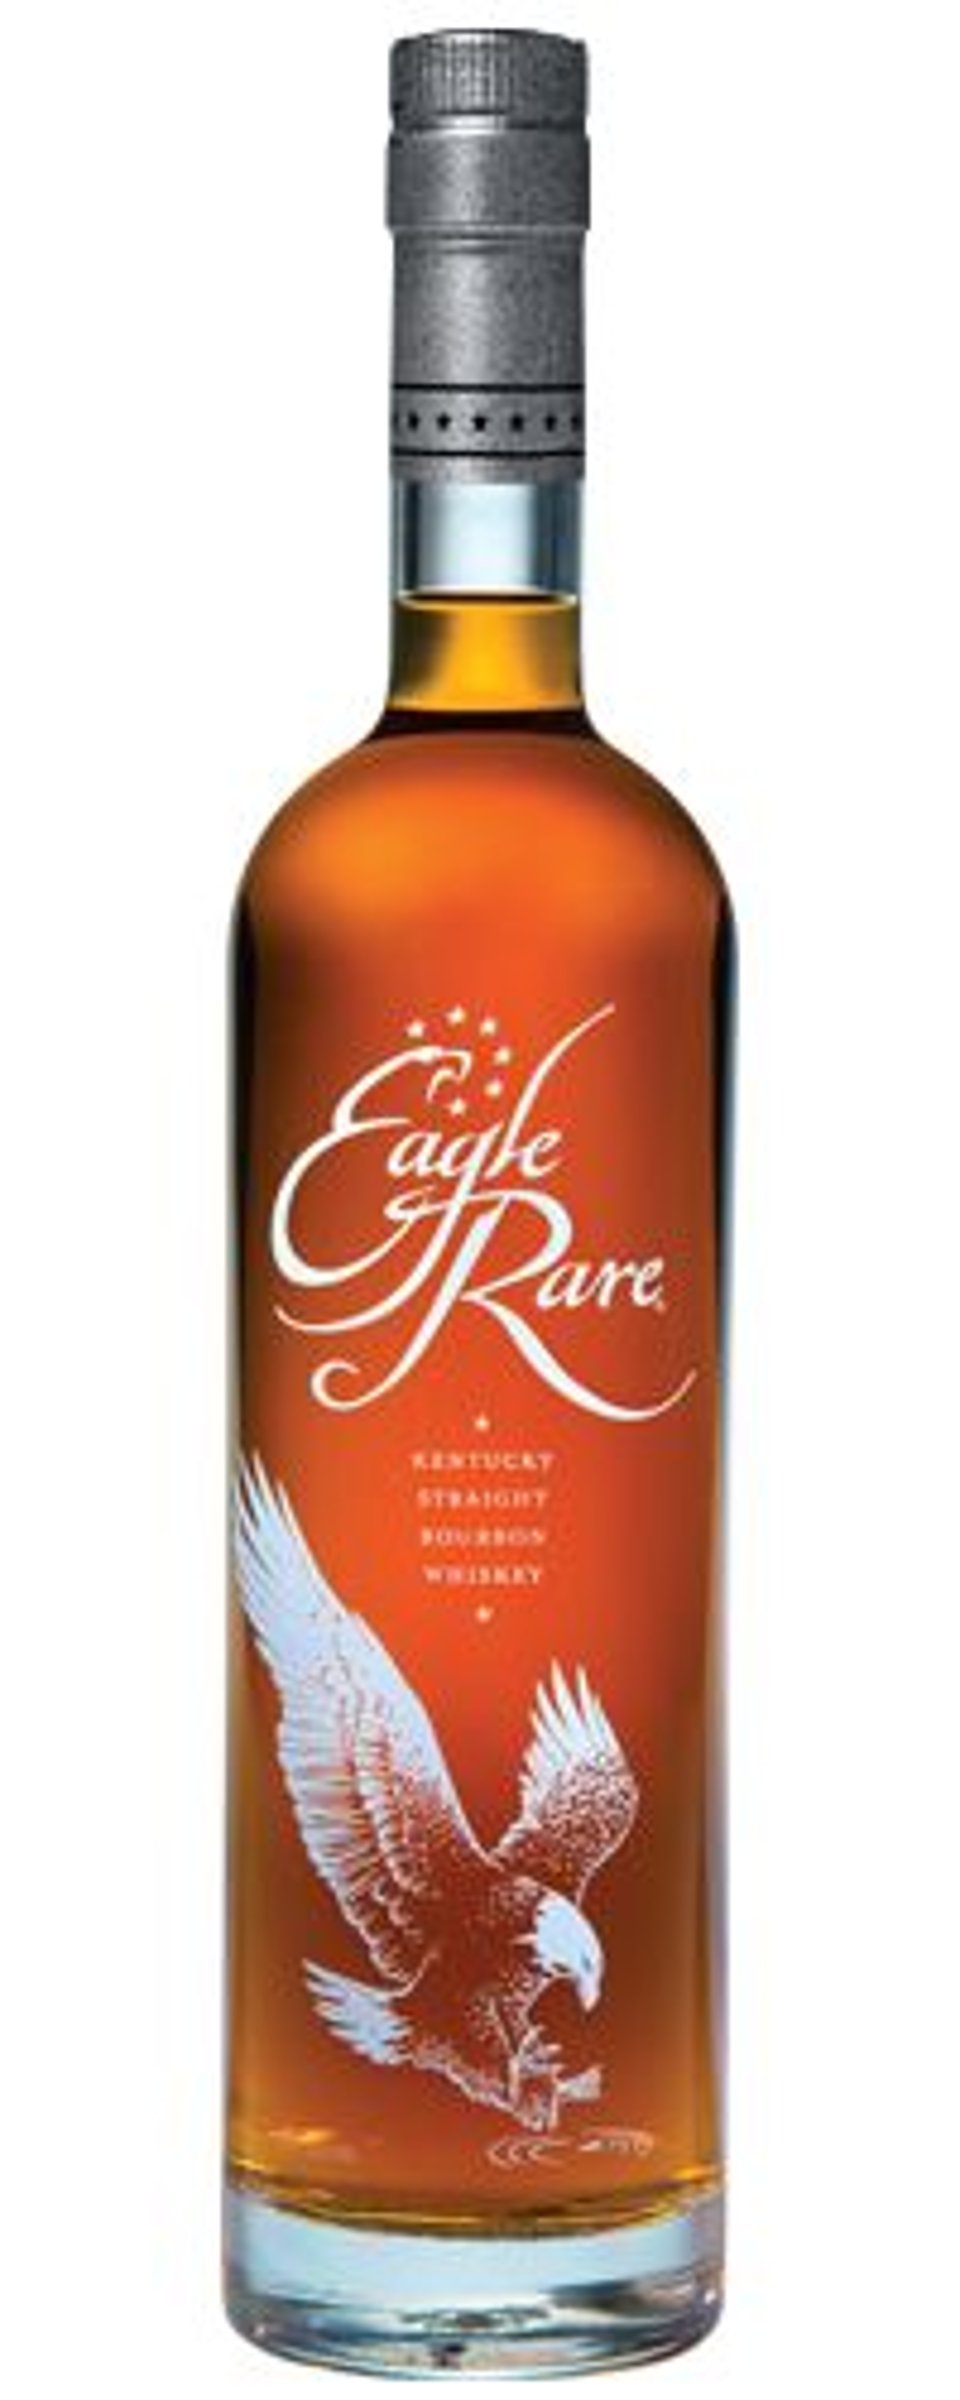 Eagle rare bourbon